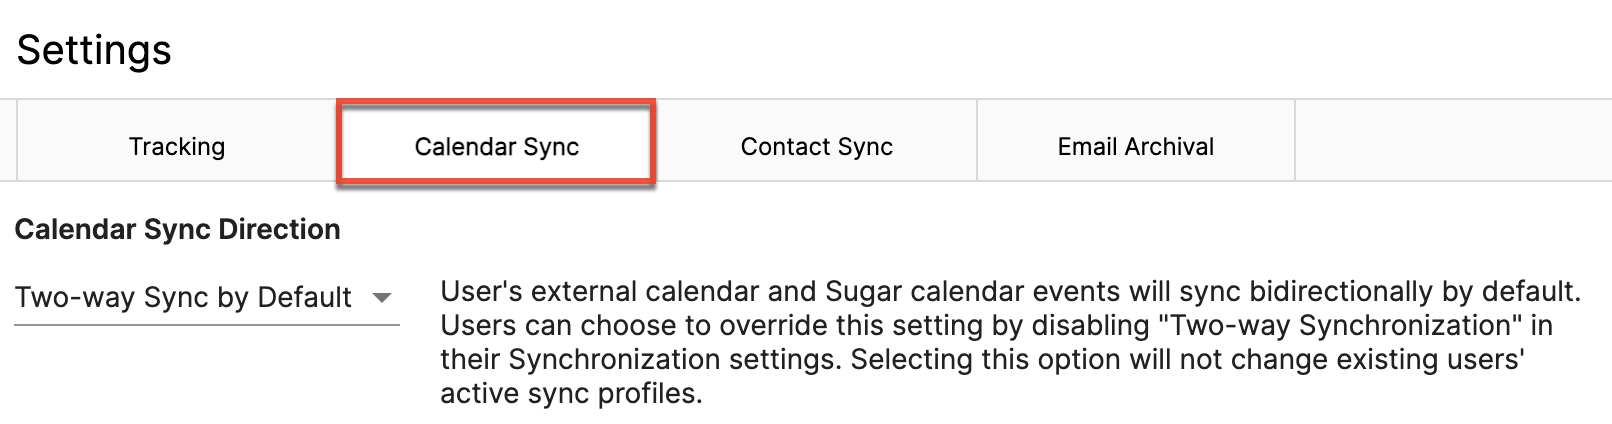 calendar sync settings